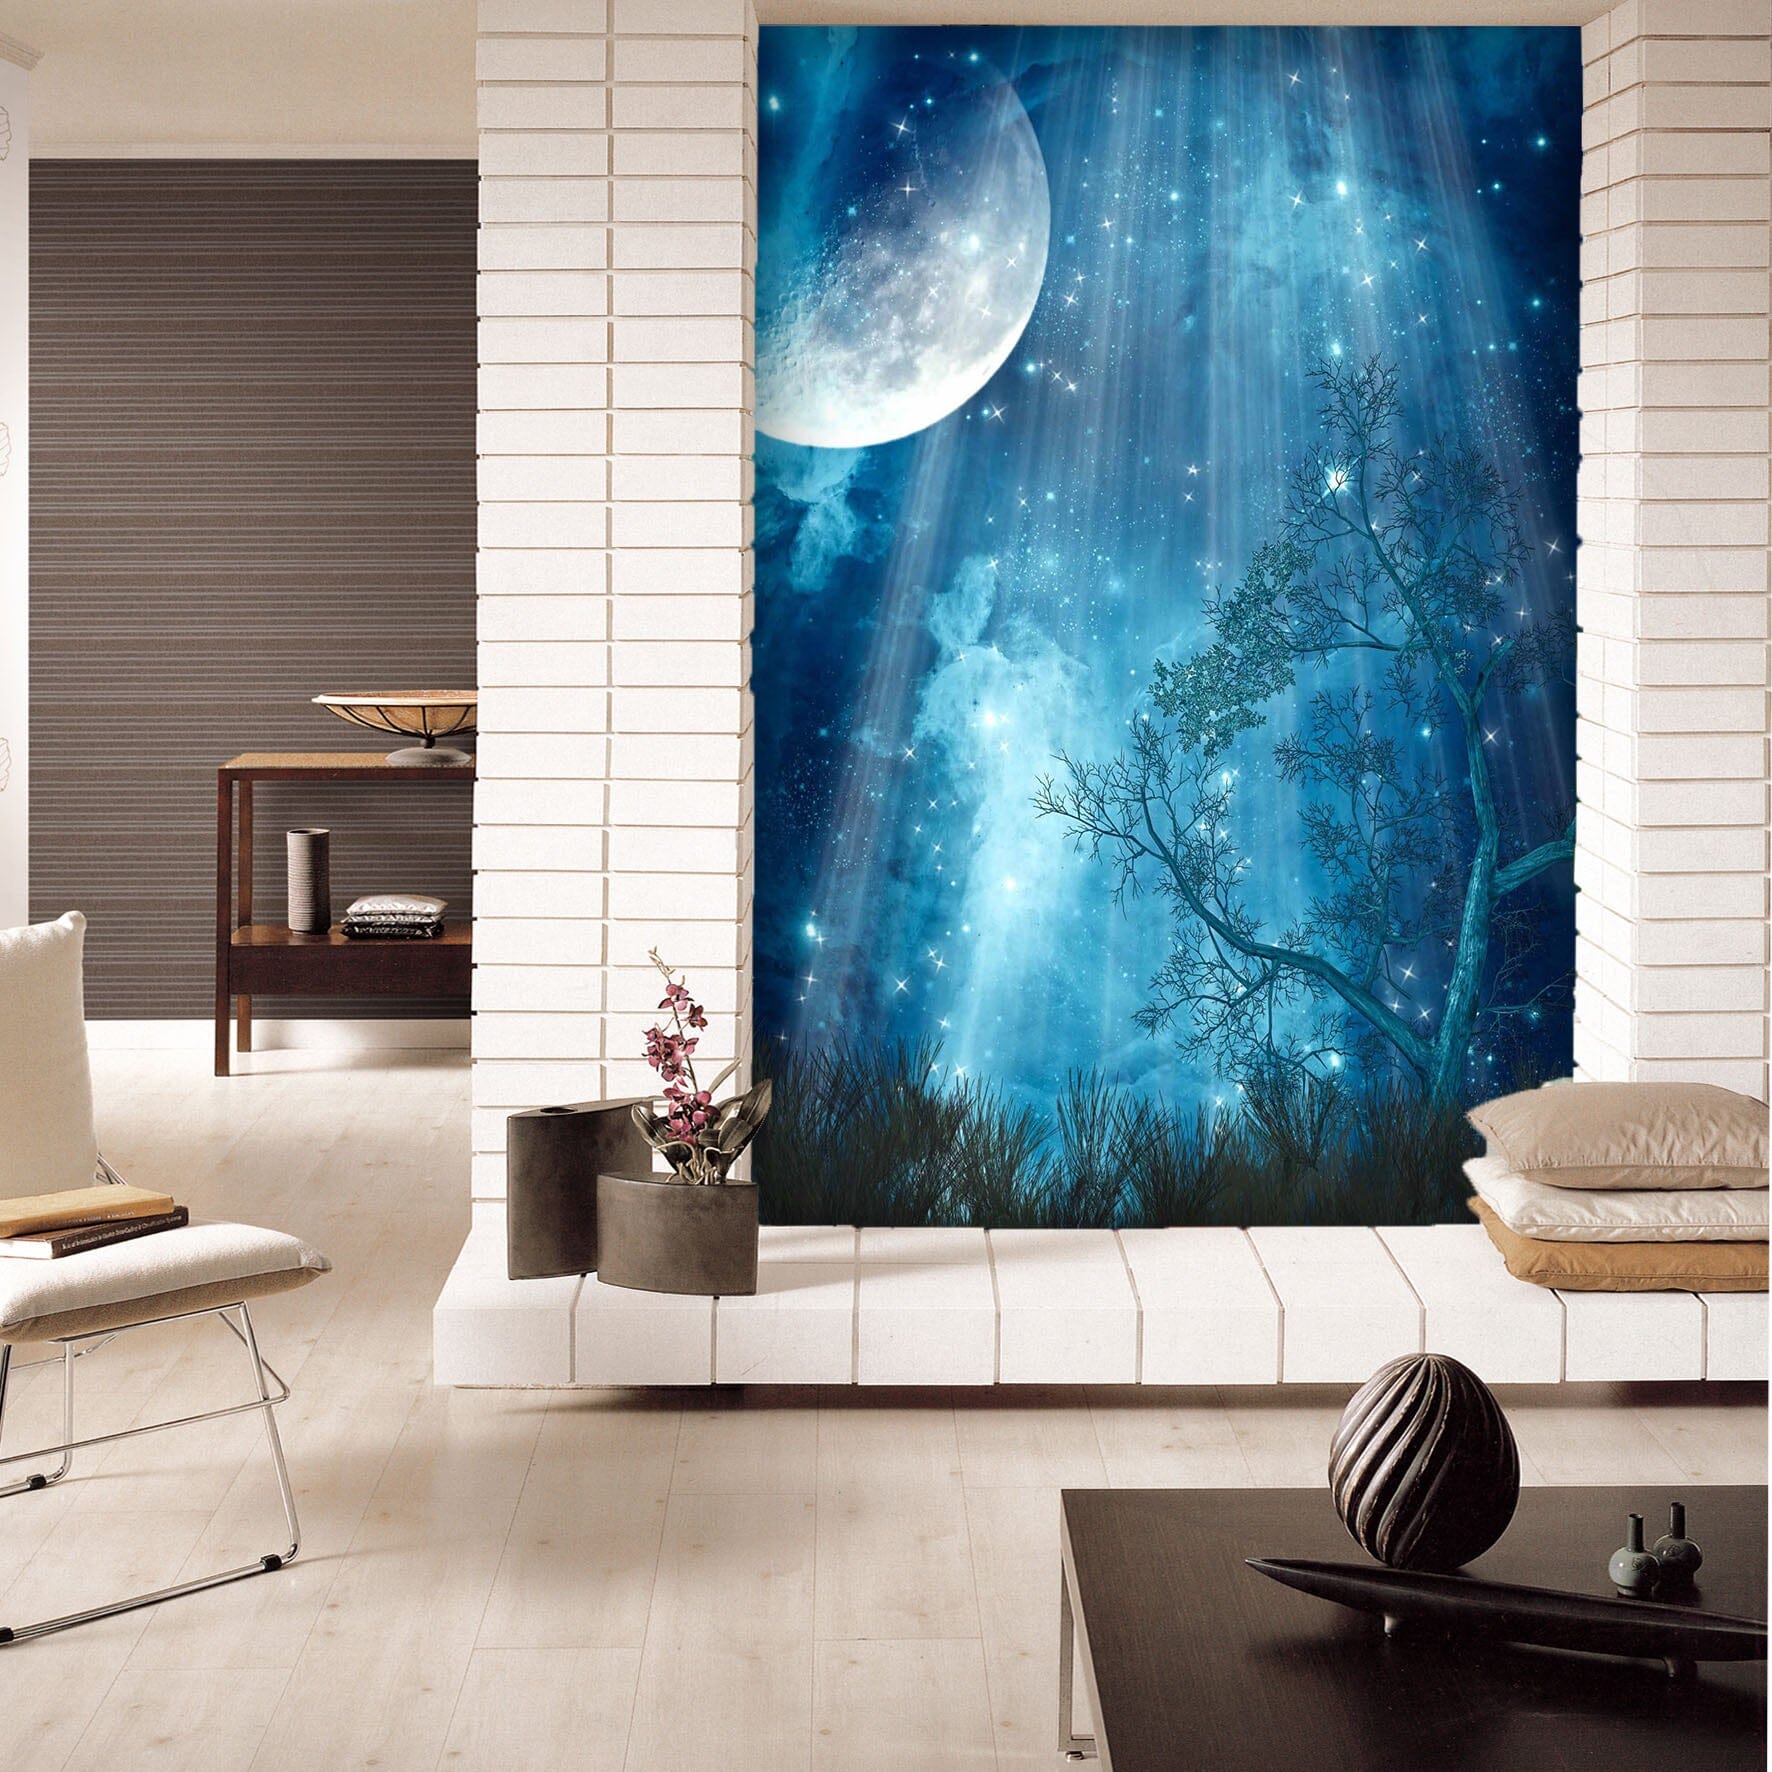 3D Moonlight Stars 101 Wall Murals Wallpaper AJ Wallpaper 2 